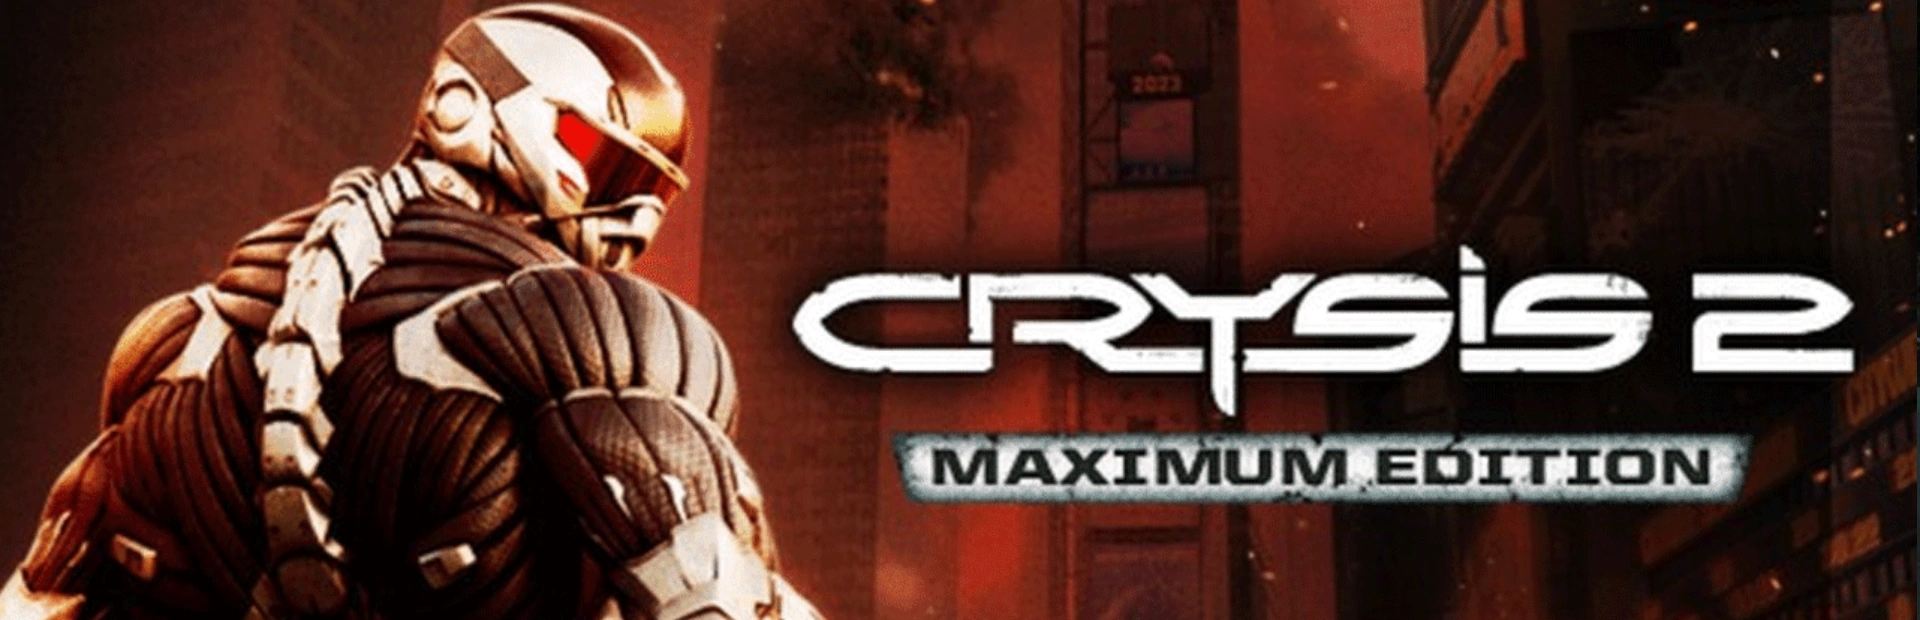 Crysis 2 Maximum Edition.banner4